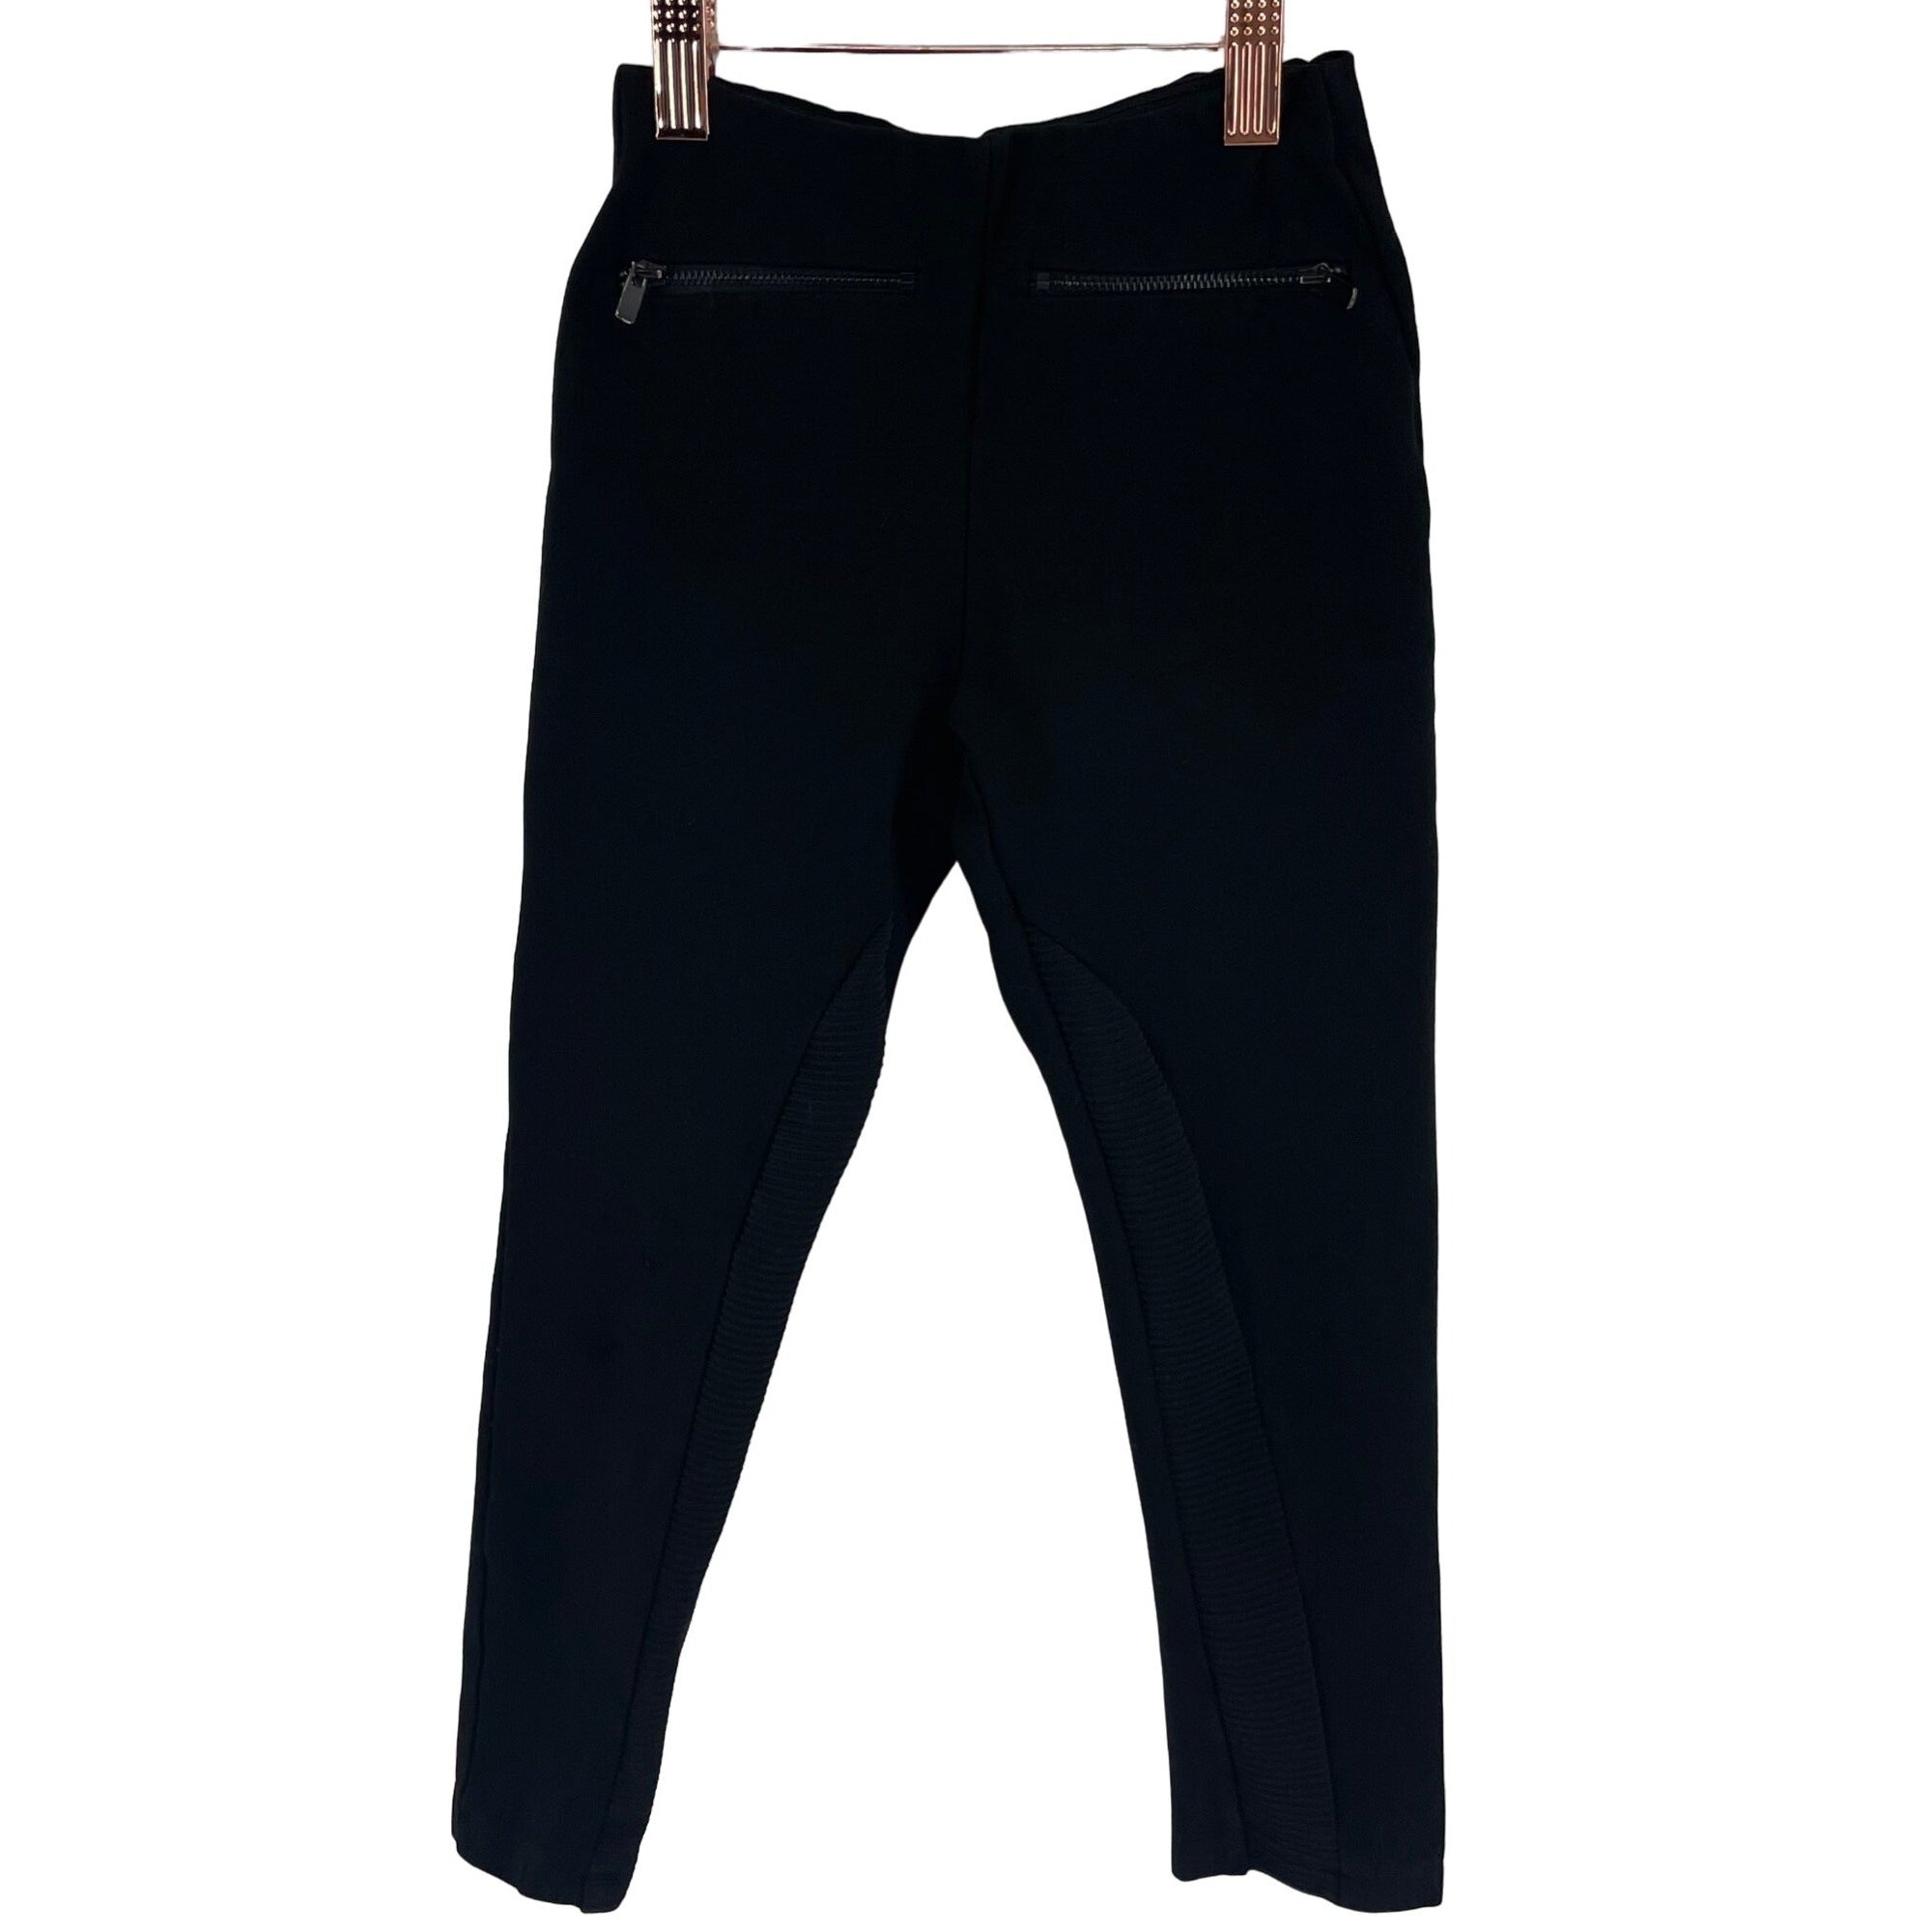 Zara Girl's Size 8 Skinny Pants W/ Elastic Waist & Zipper Pockets